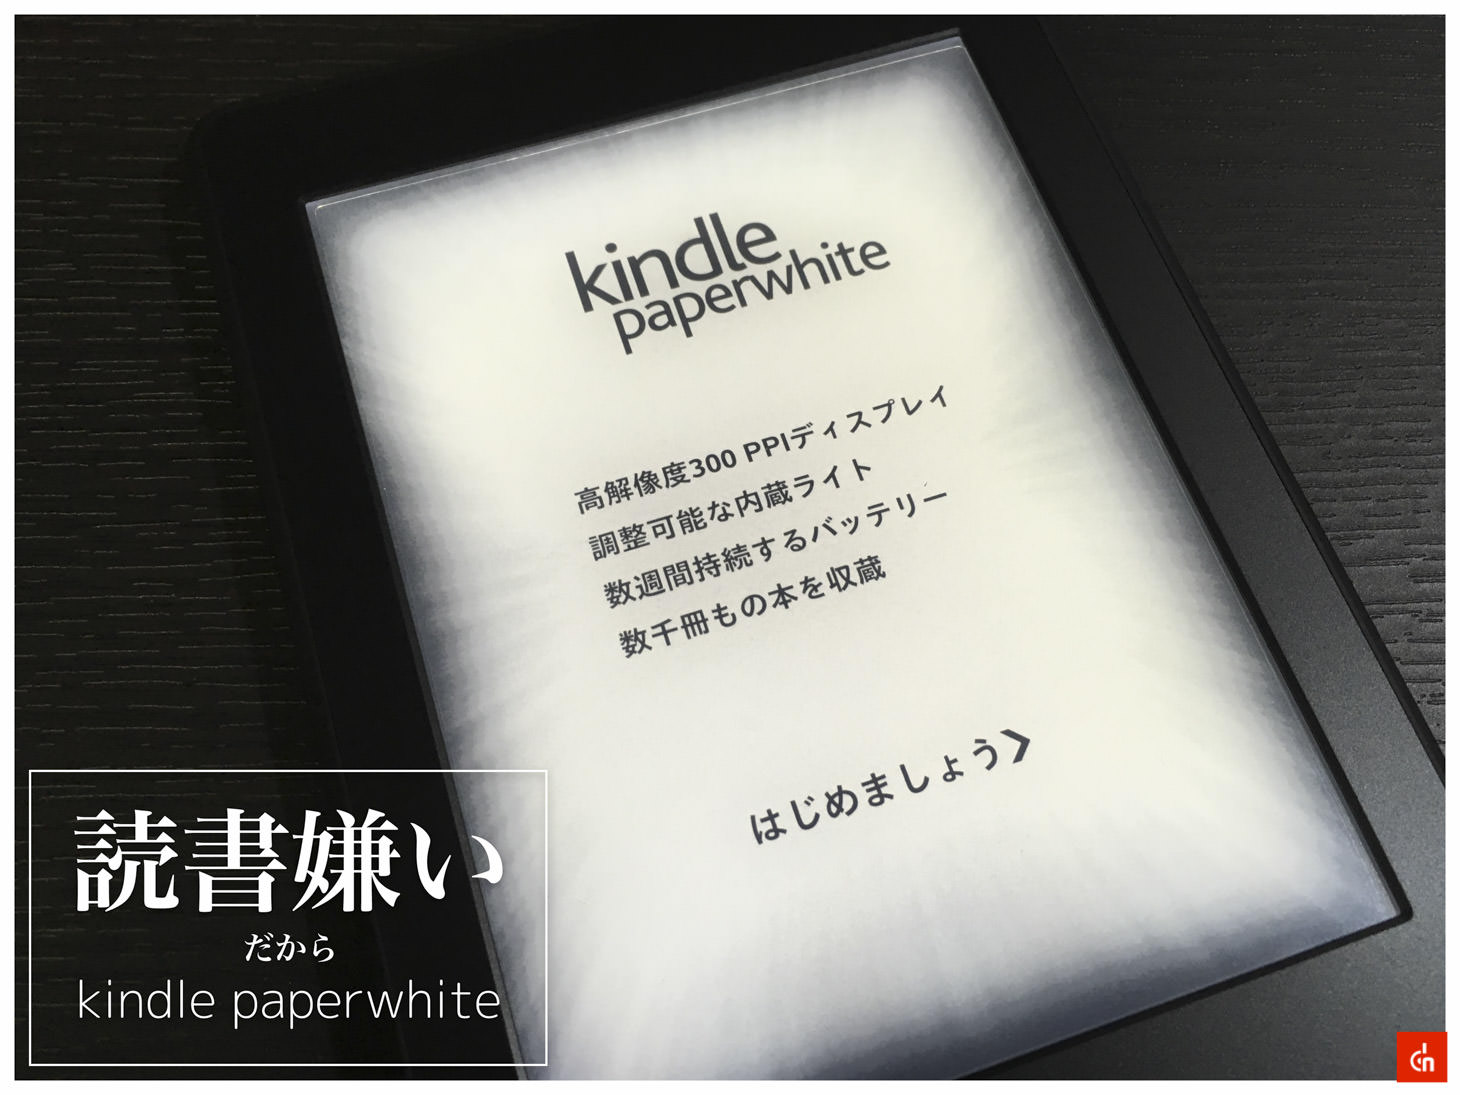 021_20160520_kindle-paperwhite